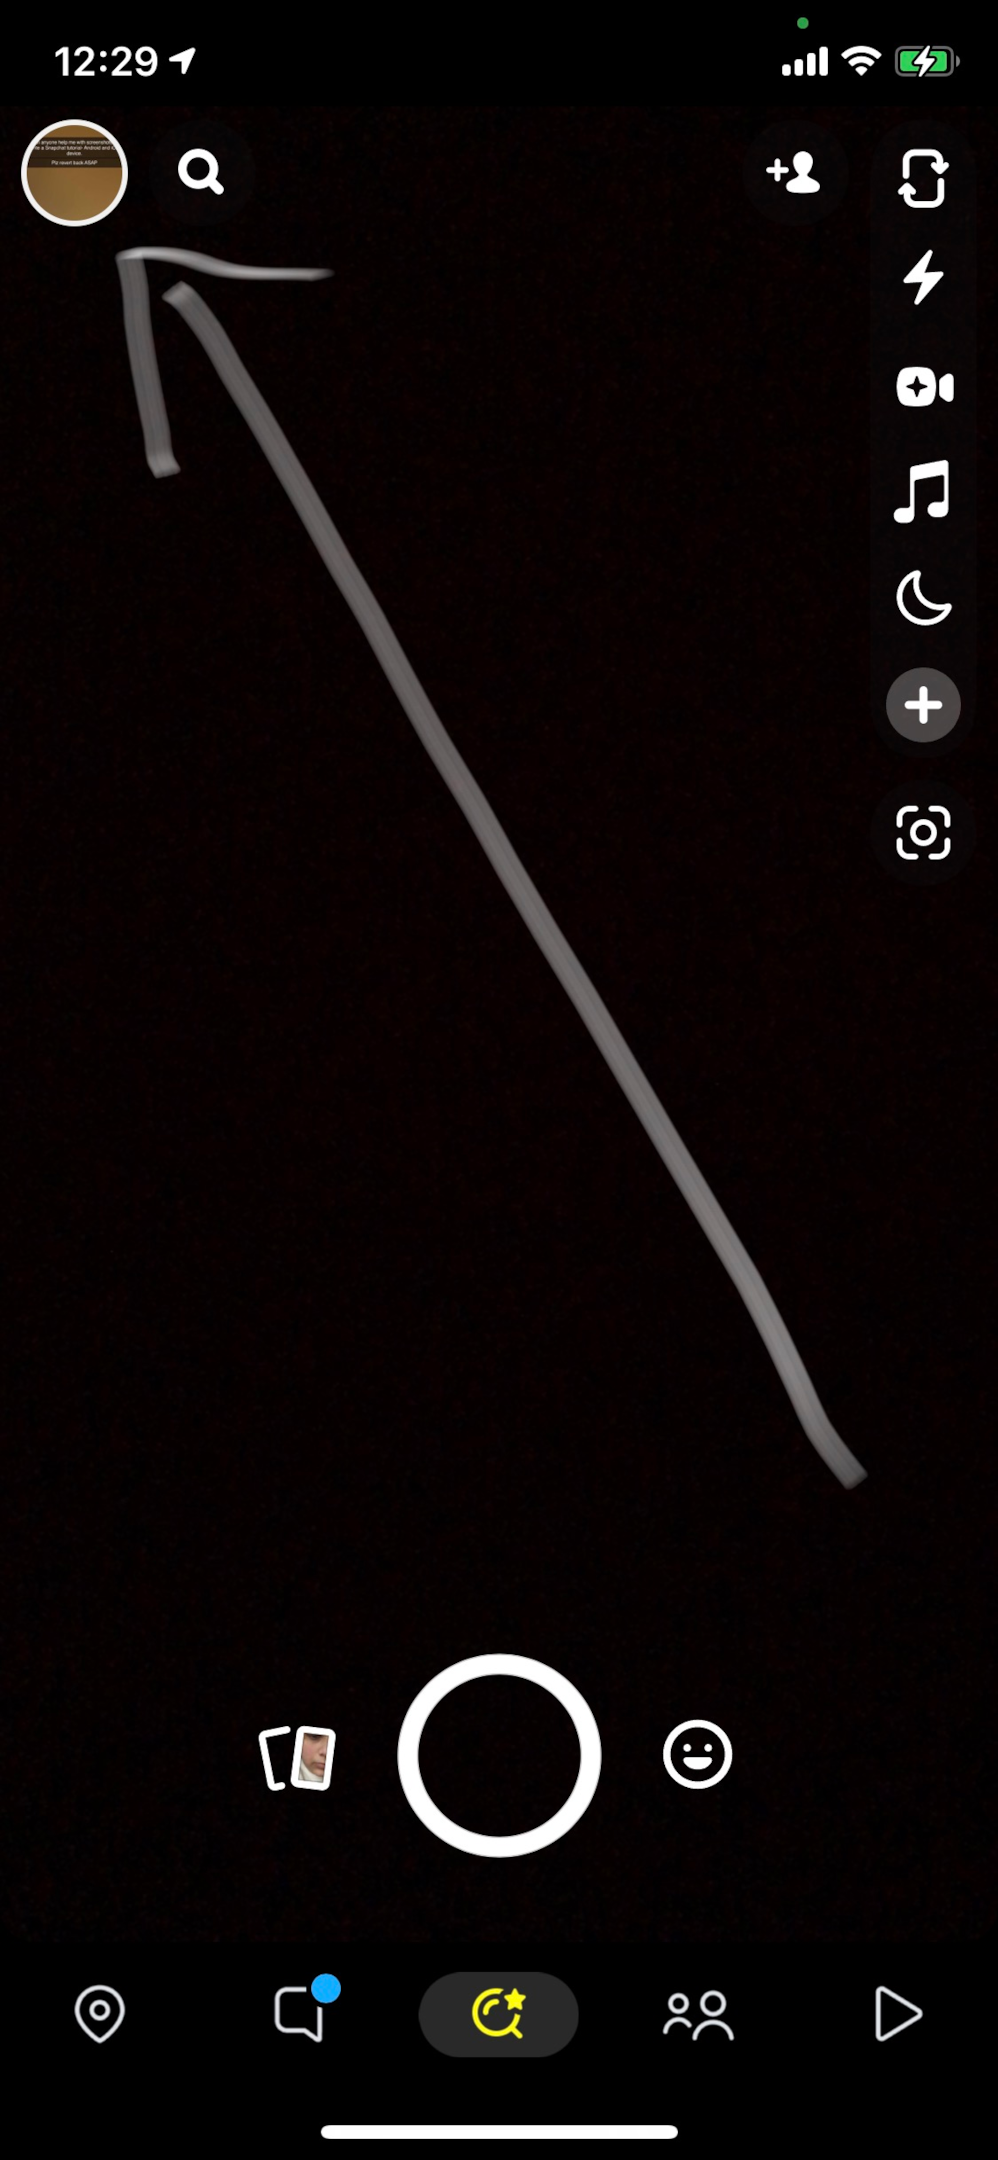 Screenshot of Snapchat launch